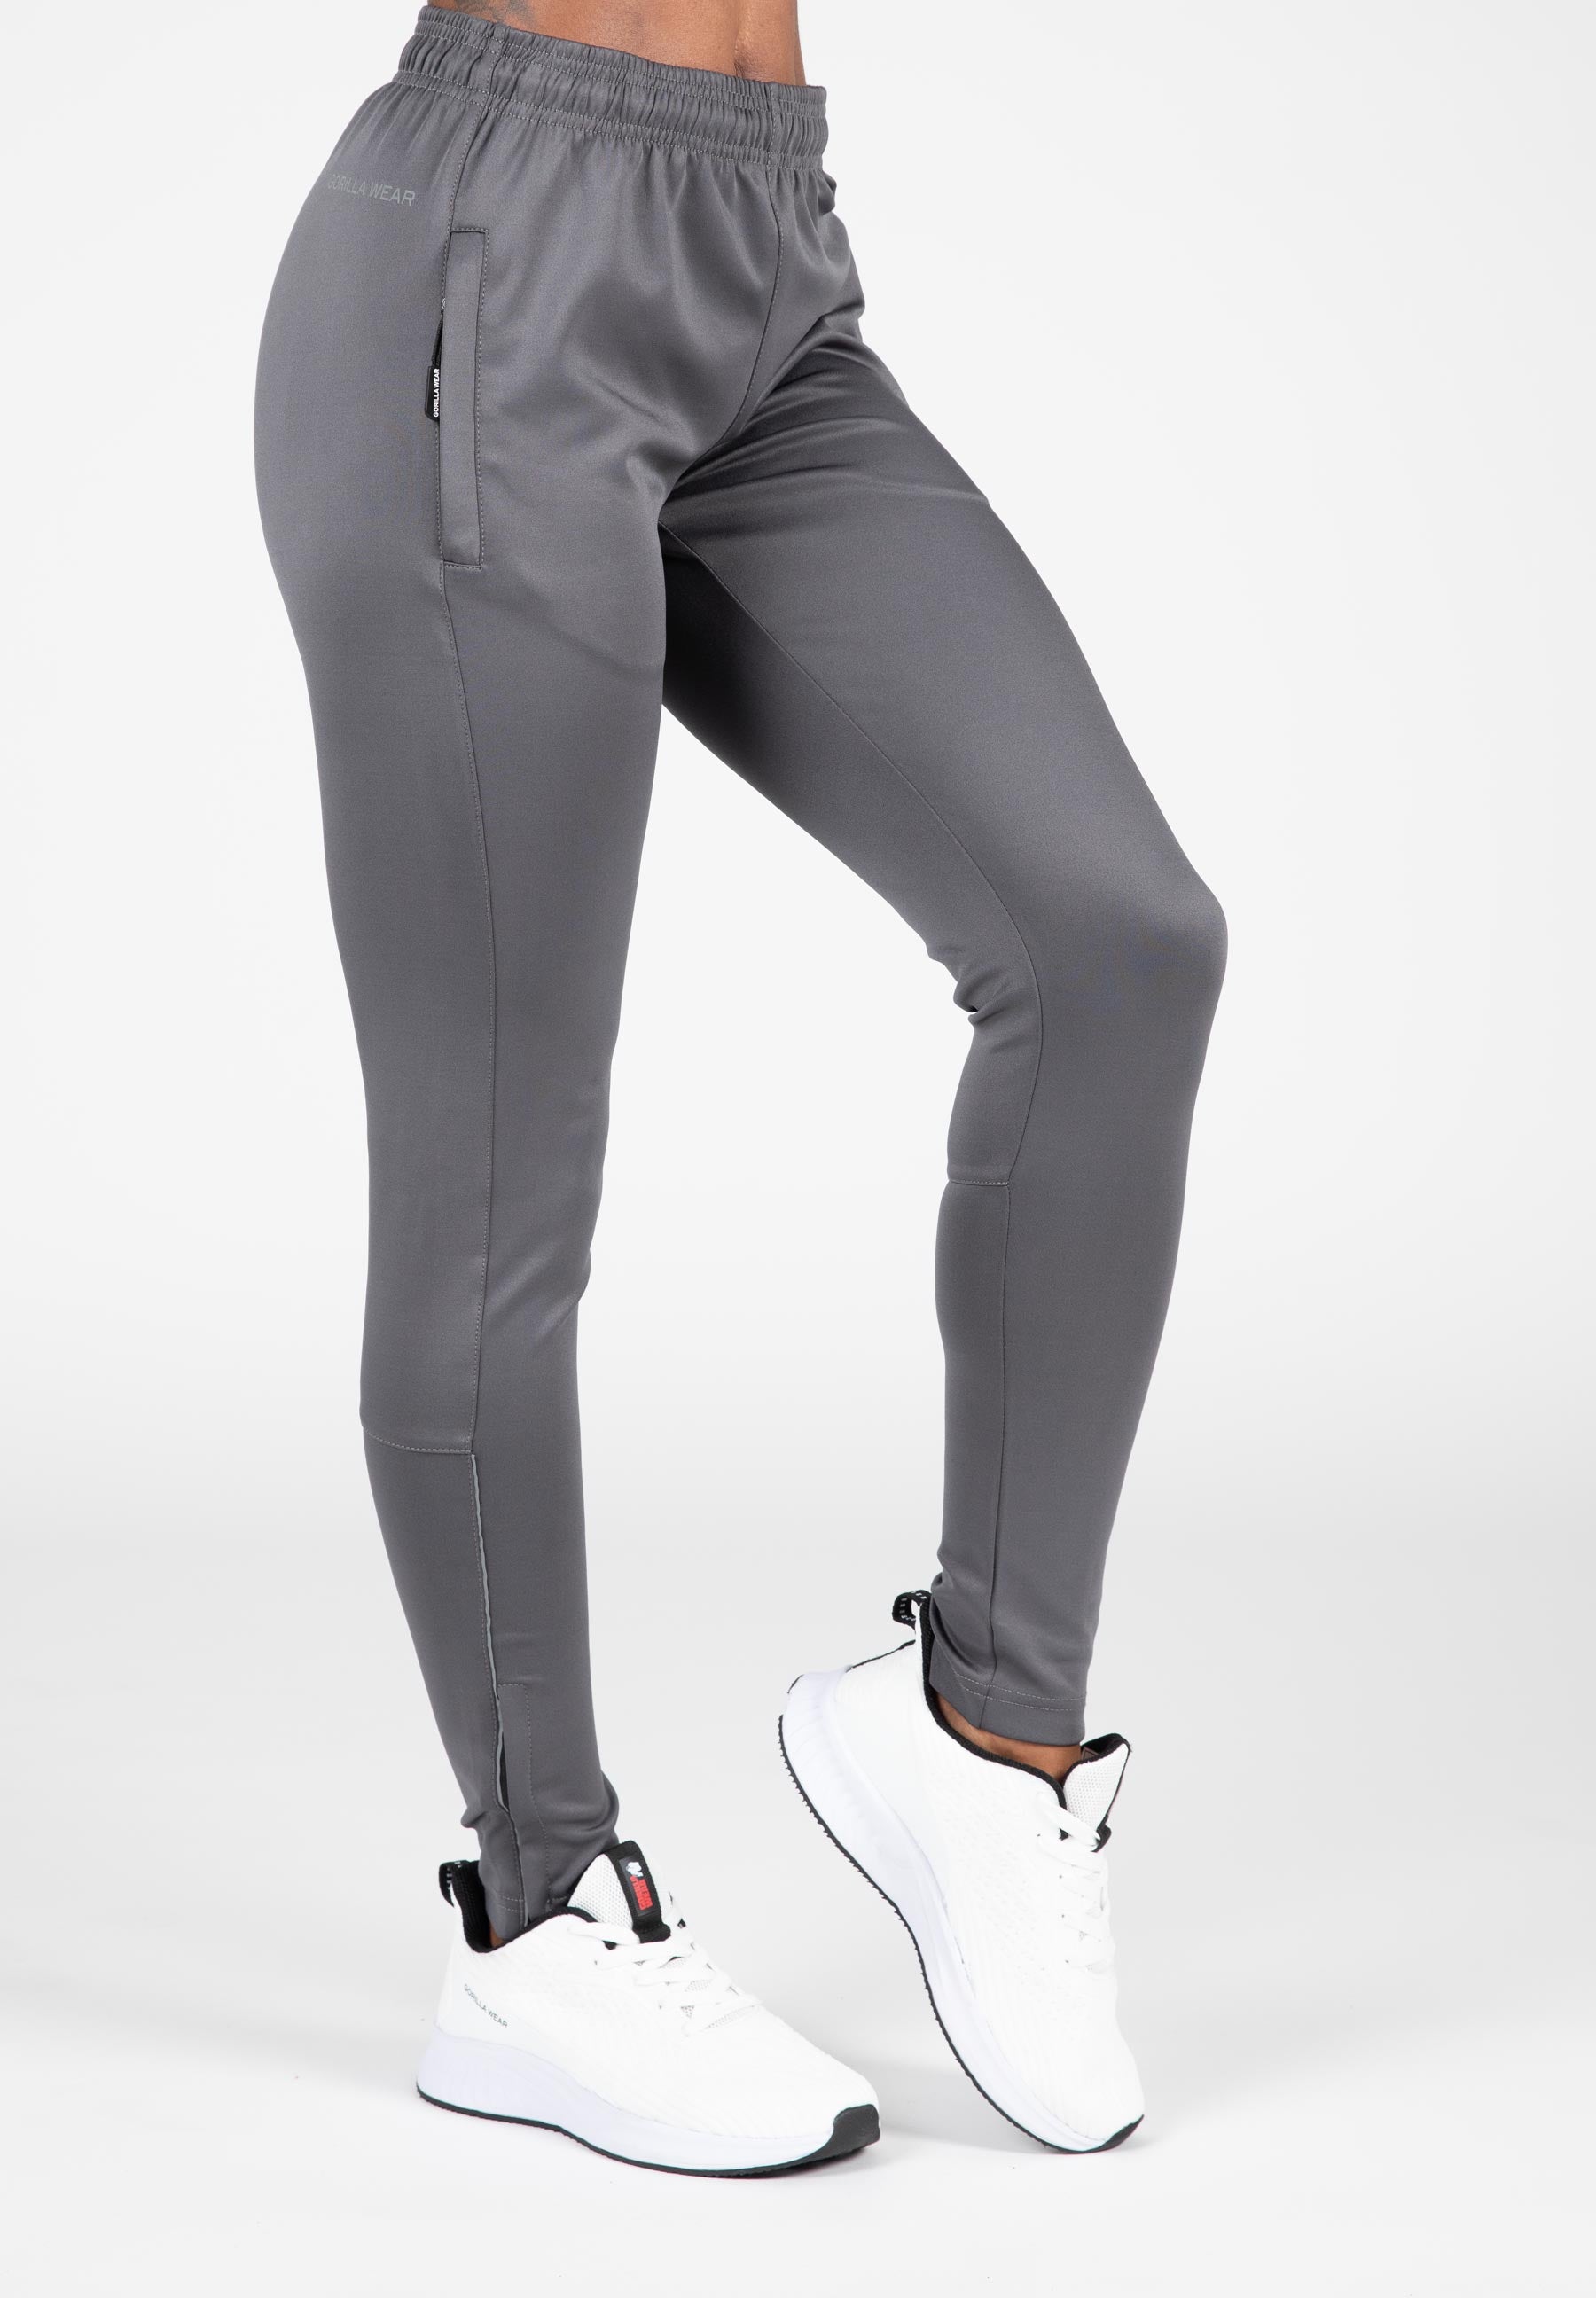 Gorilla Wear Quincy Seamless Leggings - Grau, XS/S